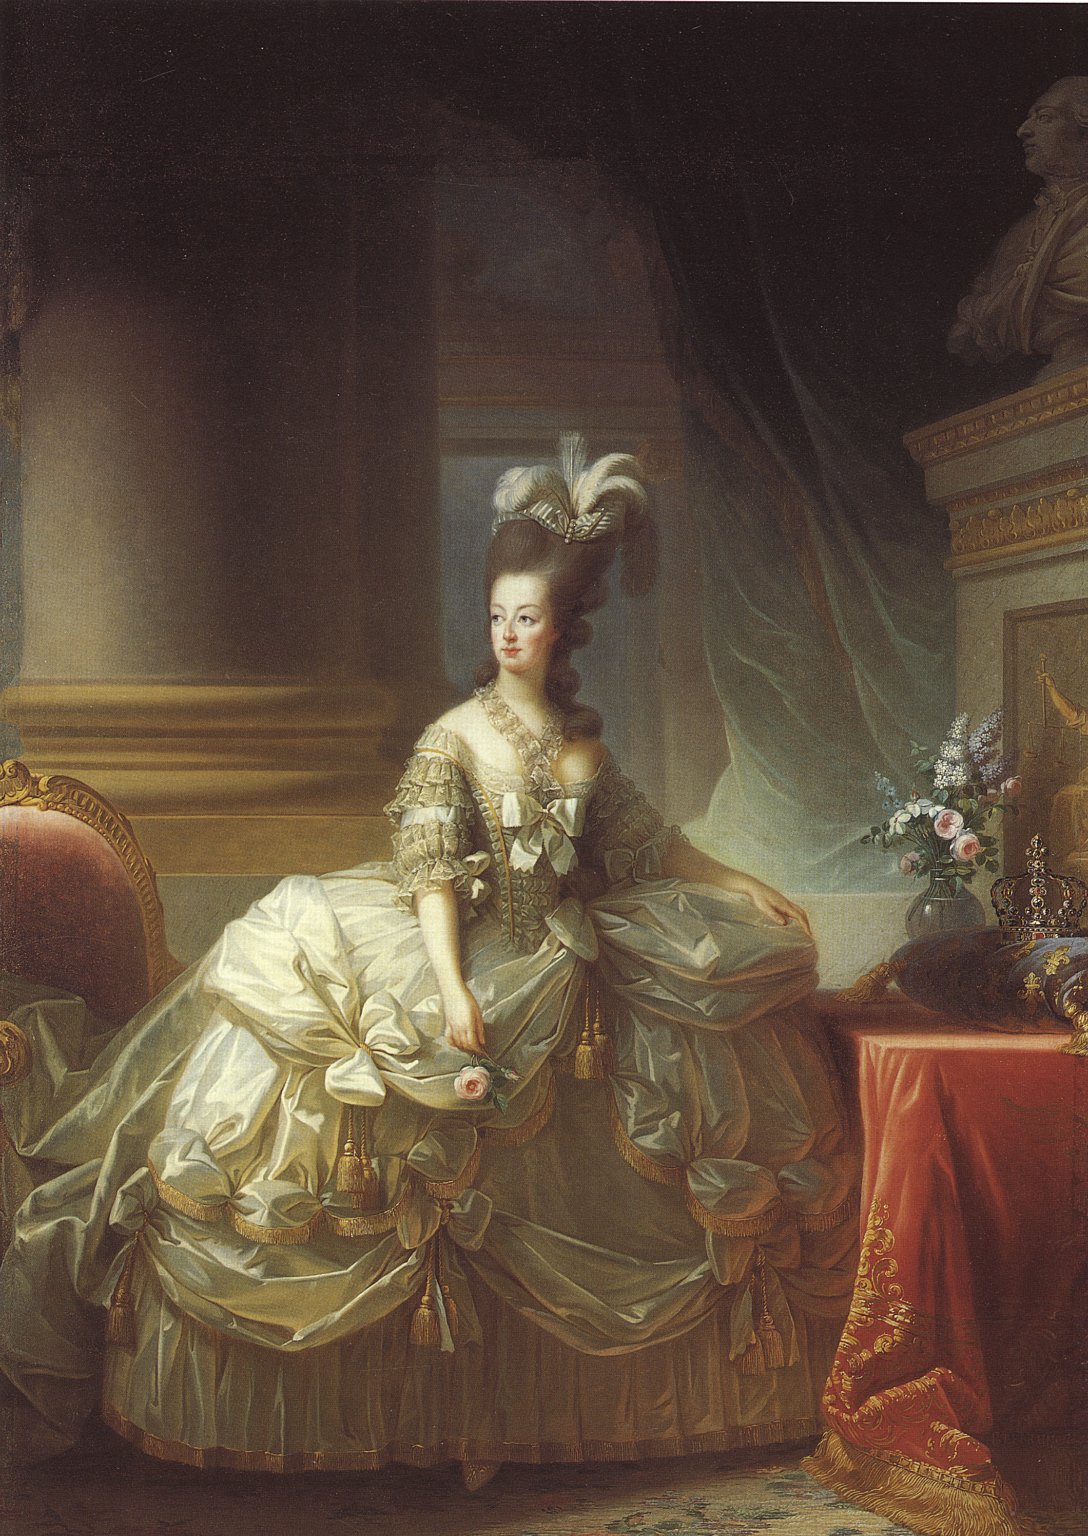 Elisabeth Vigée Lebrun, Marie Antoinette, 1778, oil on canvas, Kunsthistoriches Museum